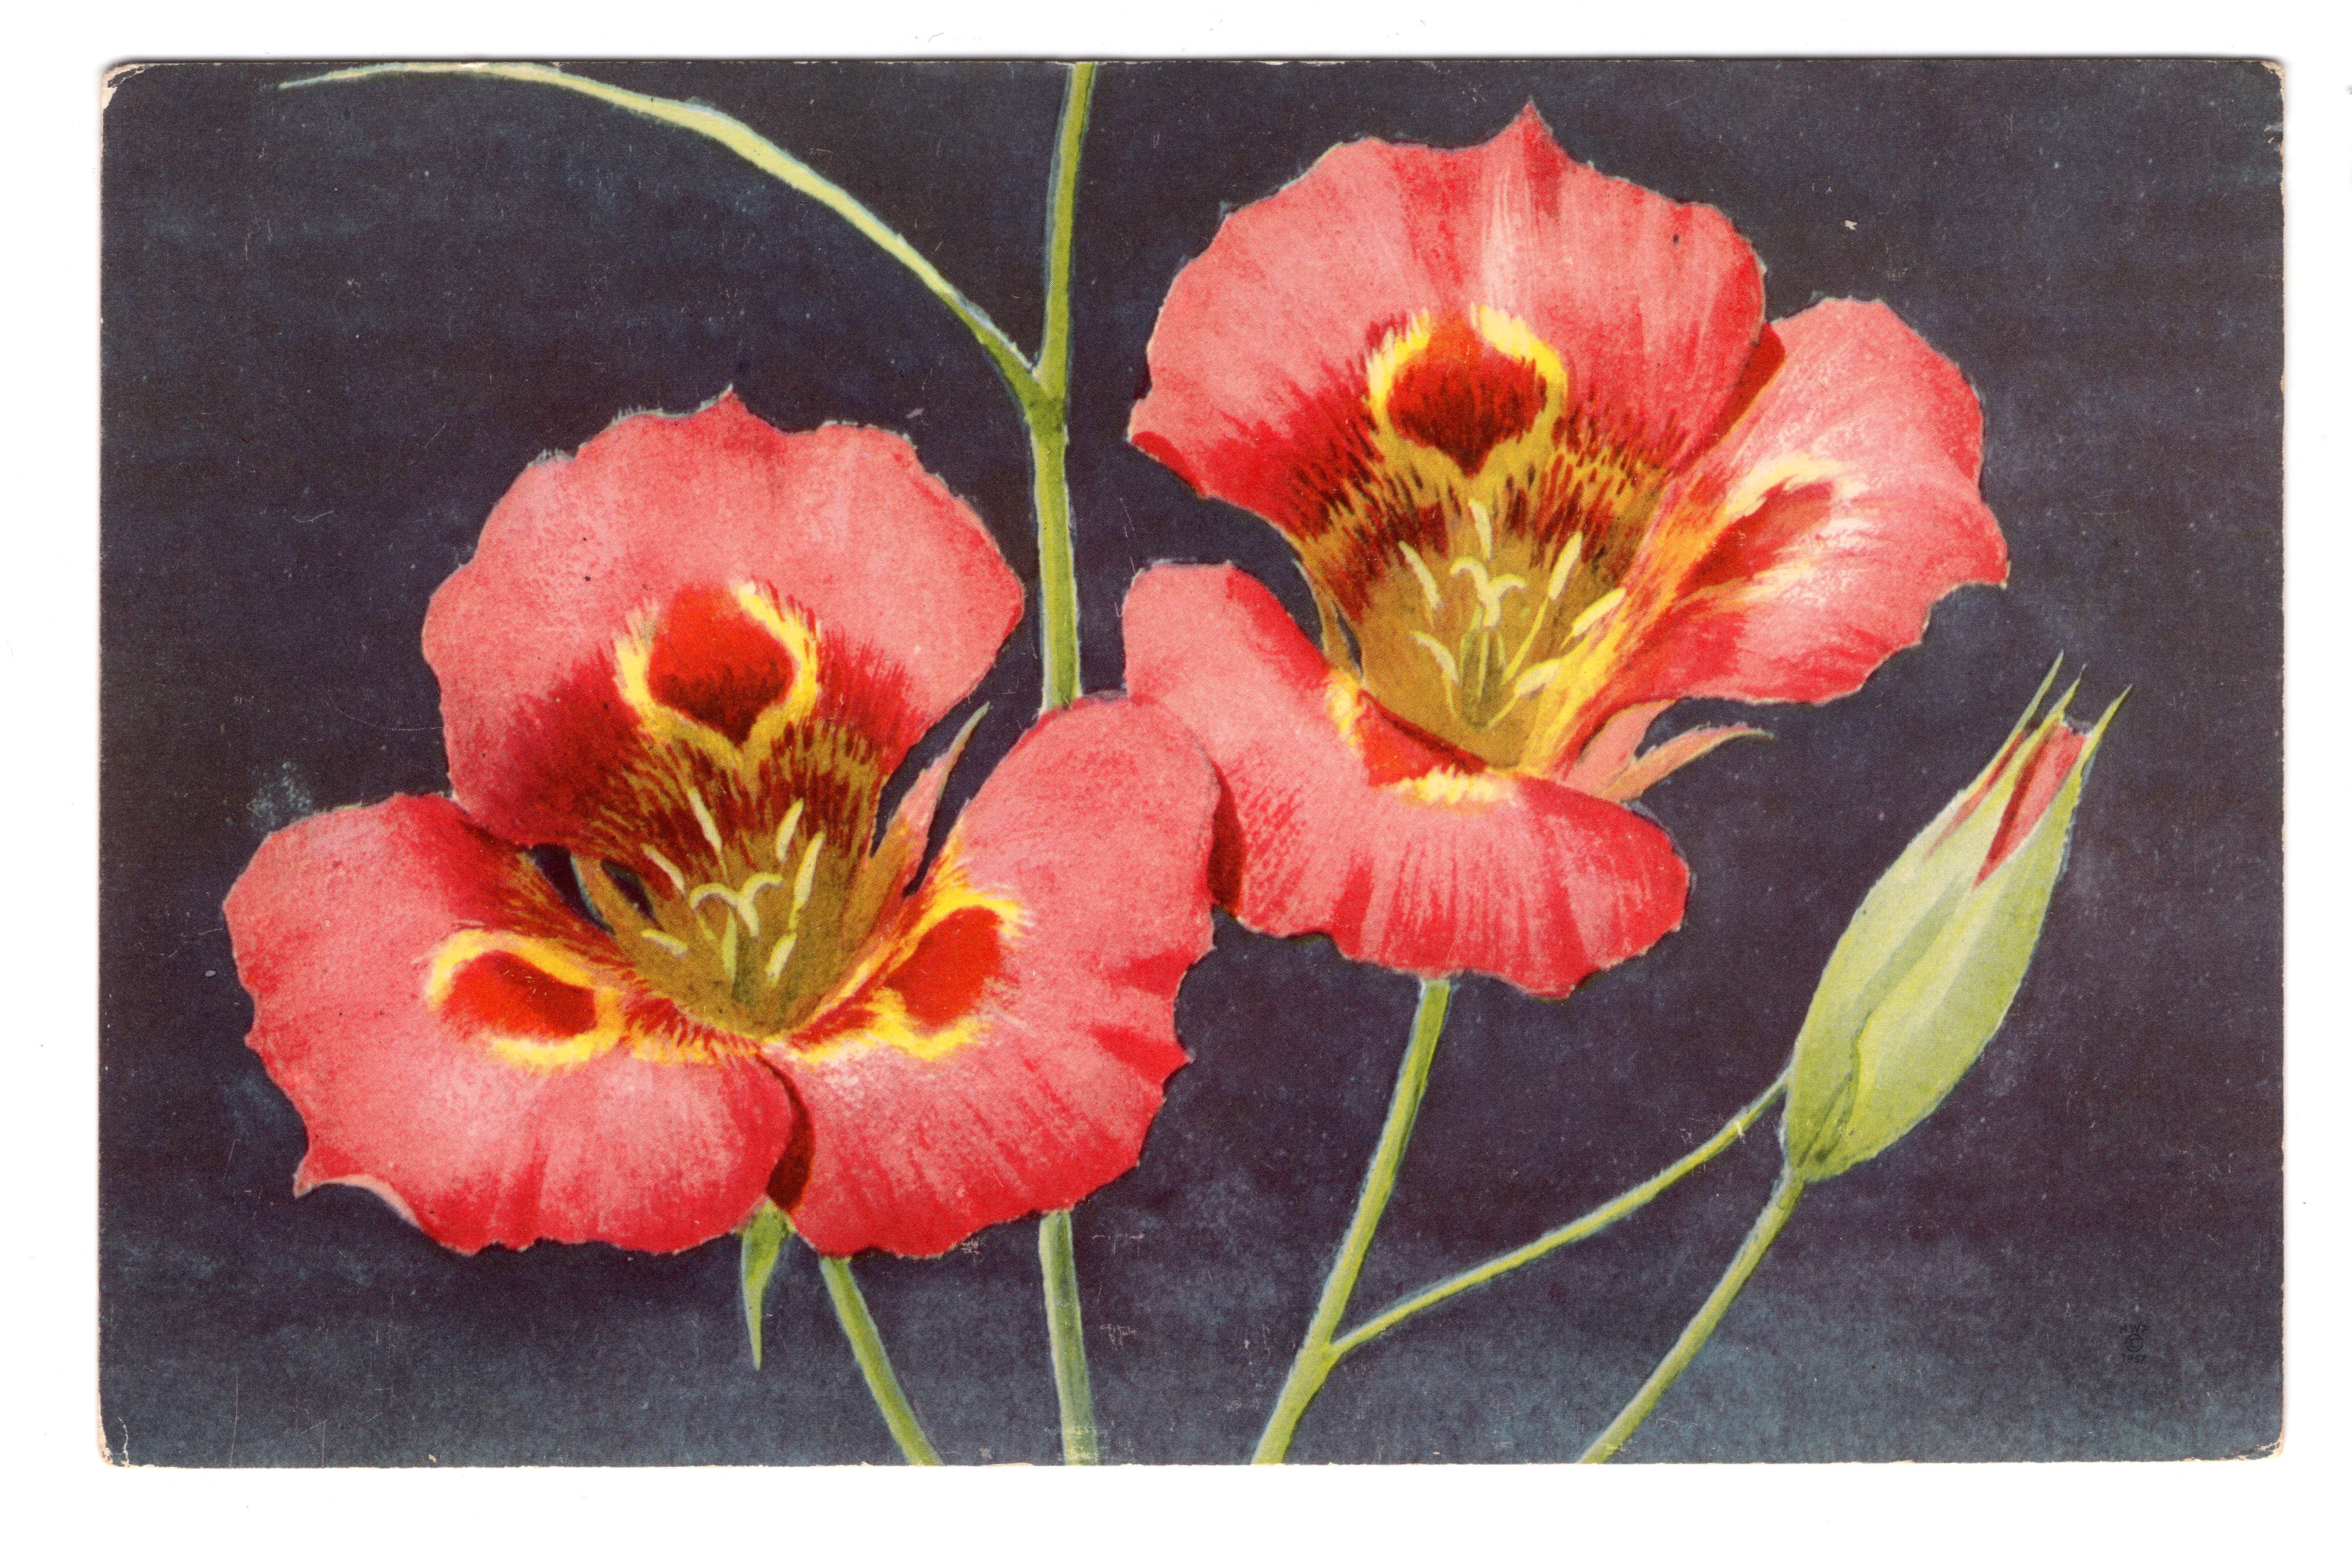 Mariposa Lily, Calochortus Venustus, Vintage Post Card